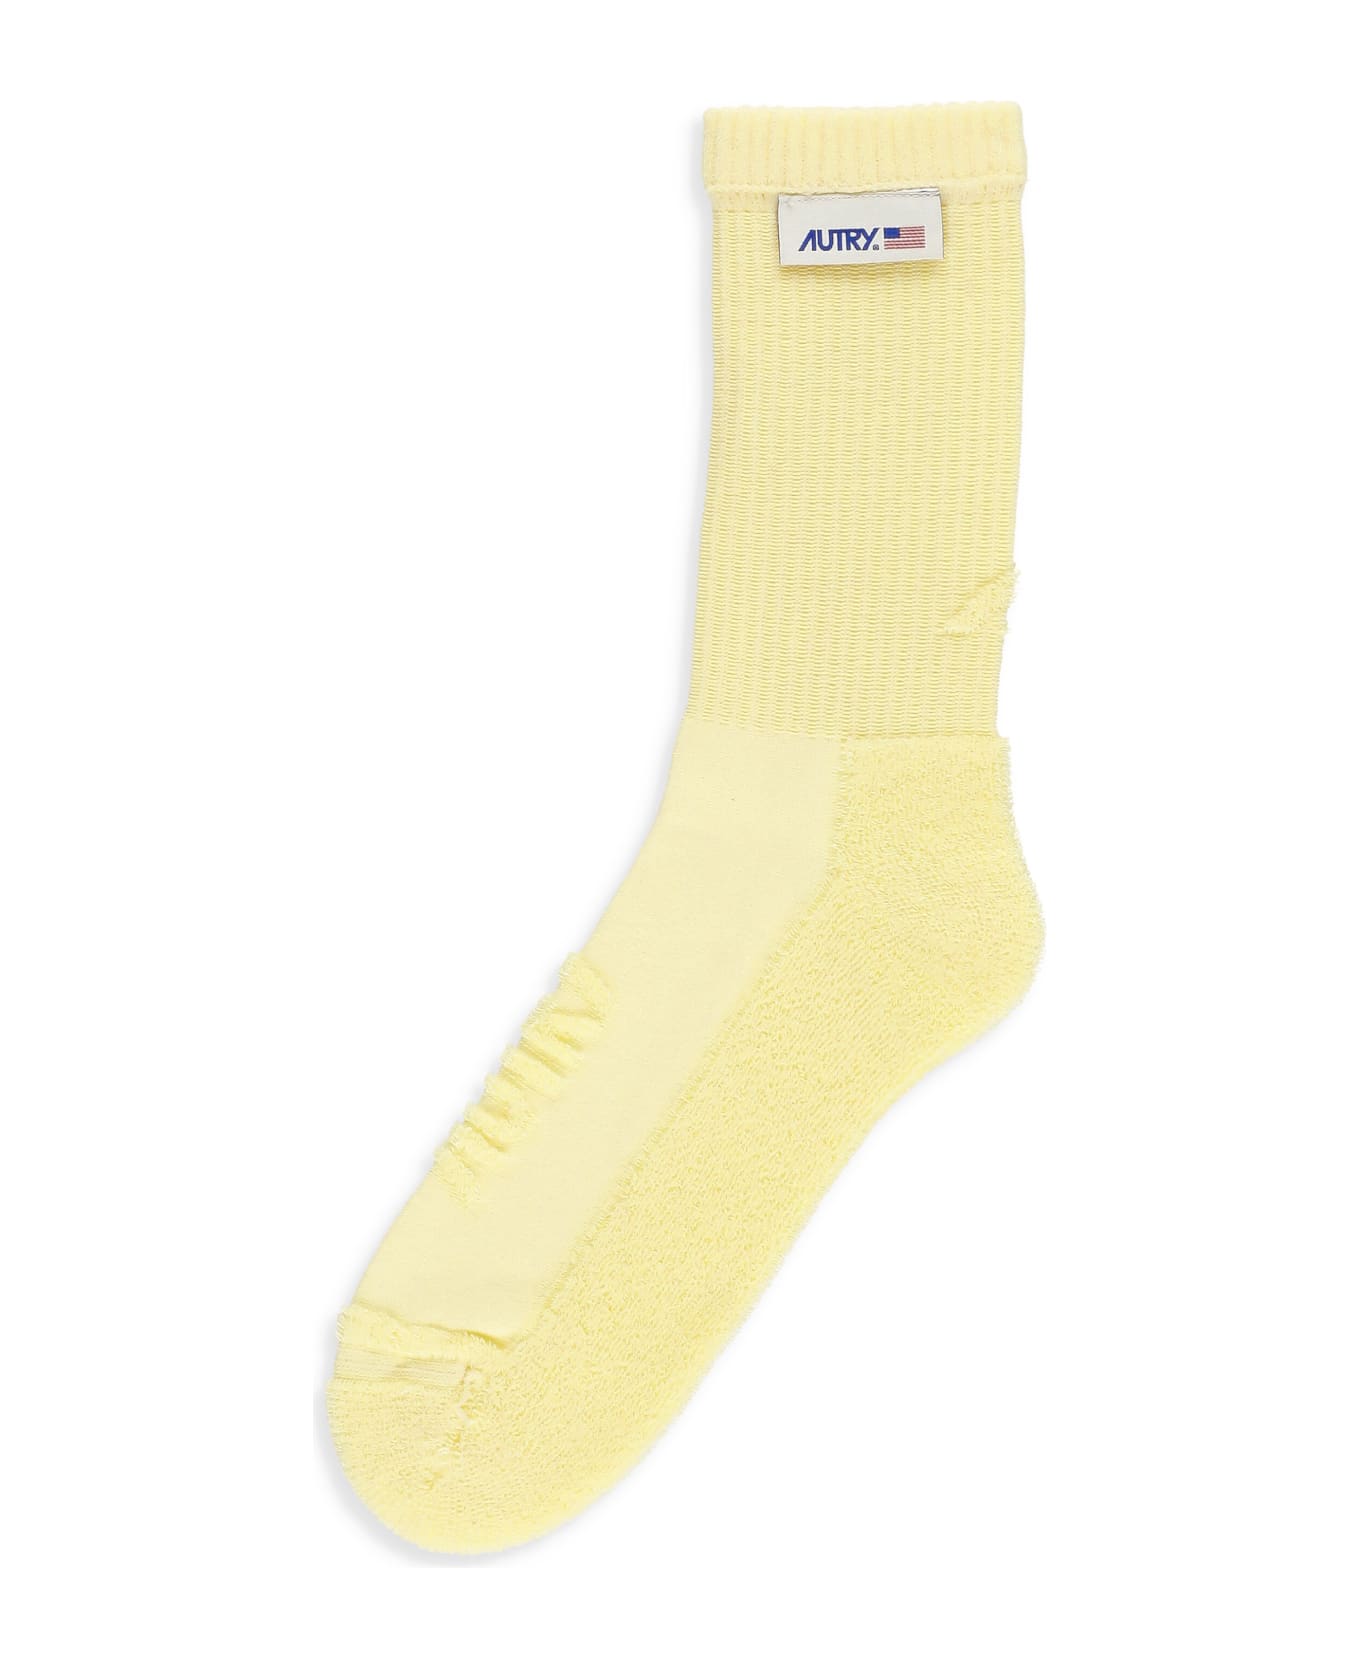 Autry Cotton Socks - Yellow